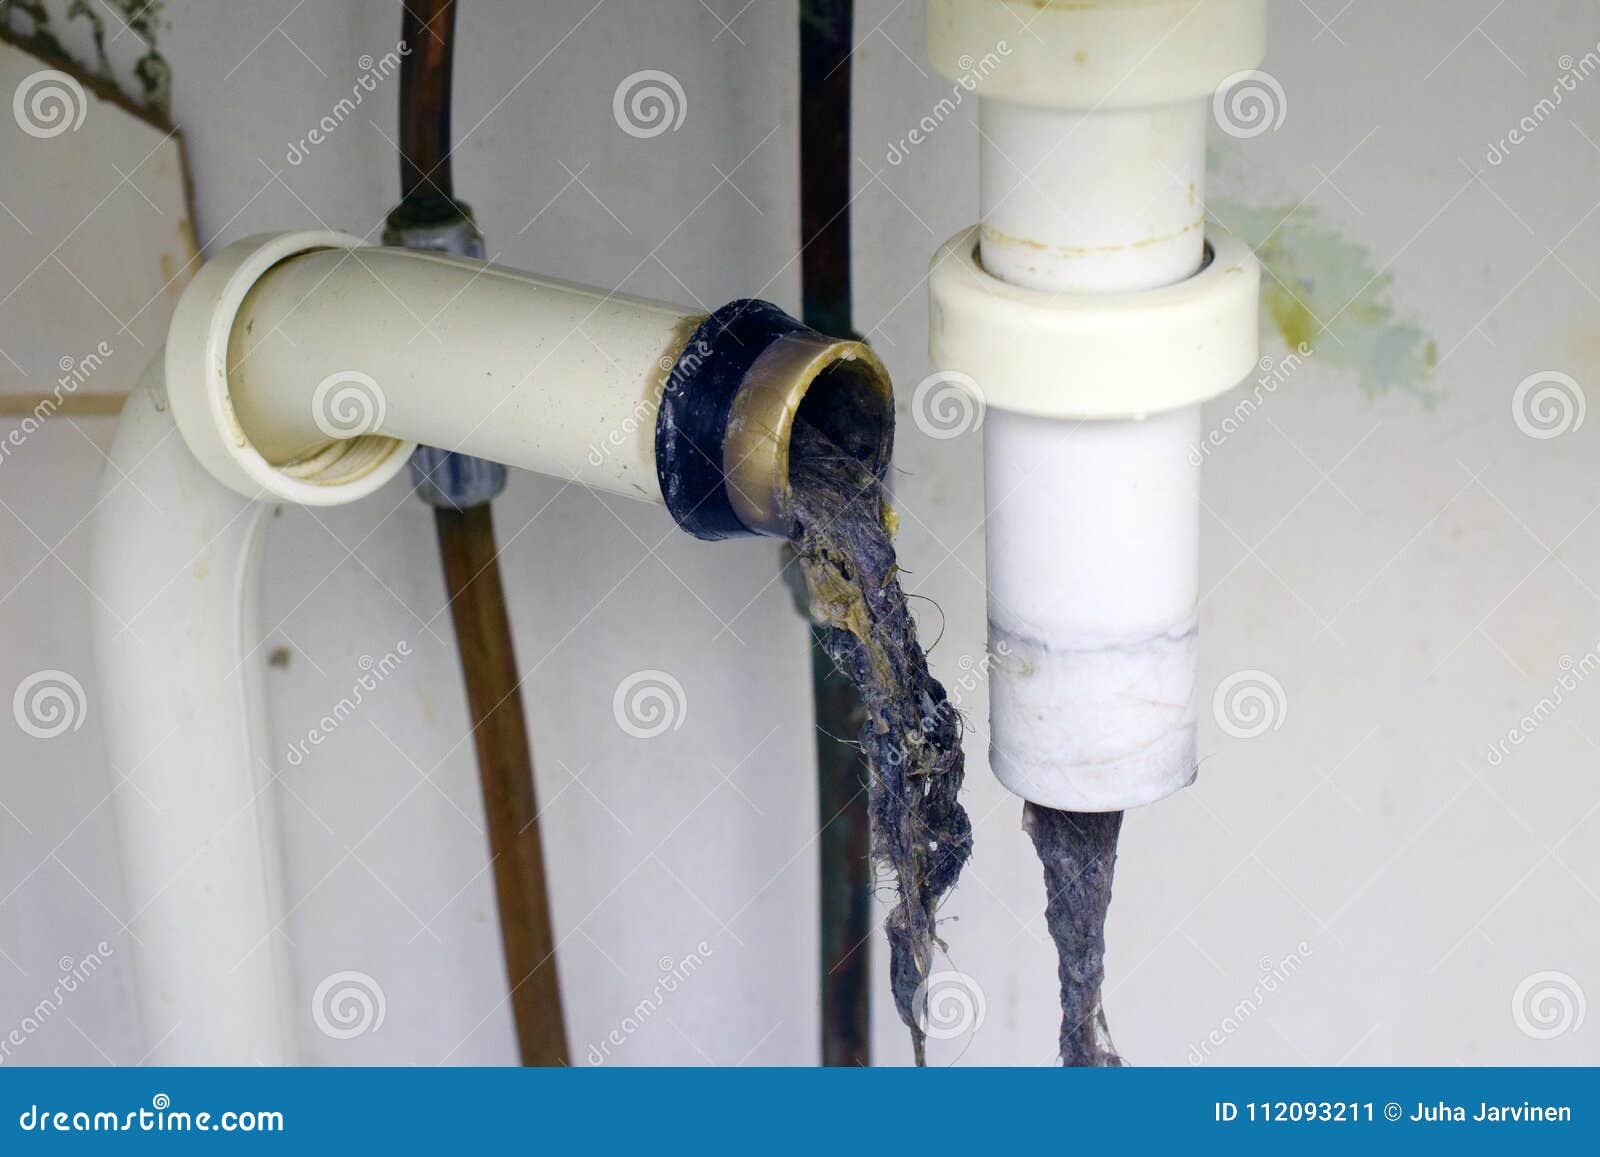 bathroom sink pipes clogged